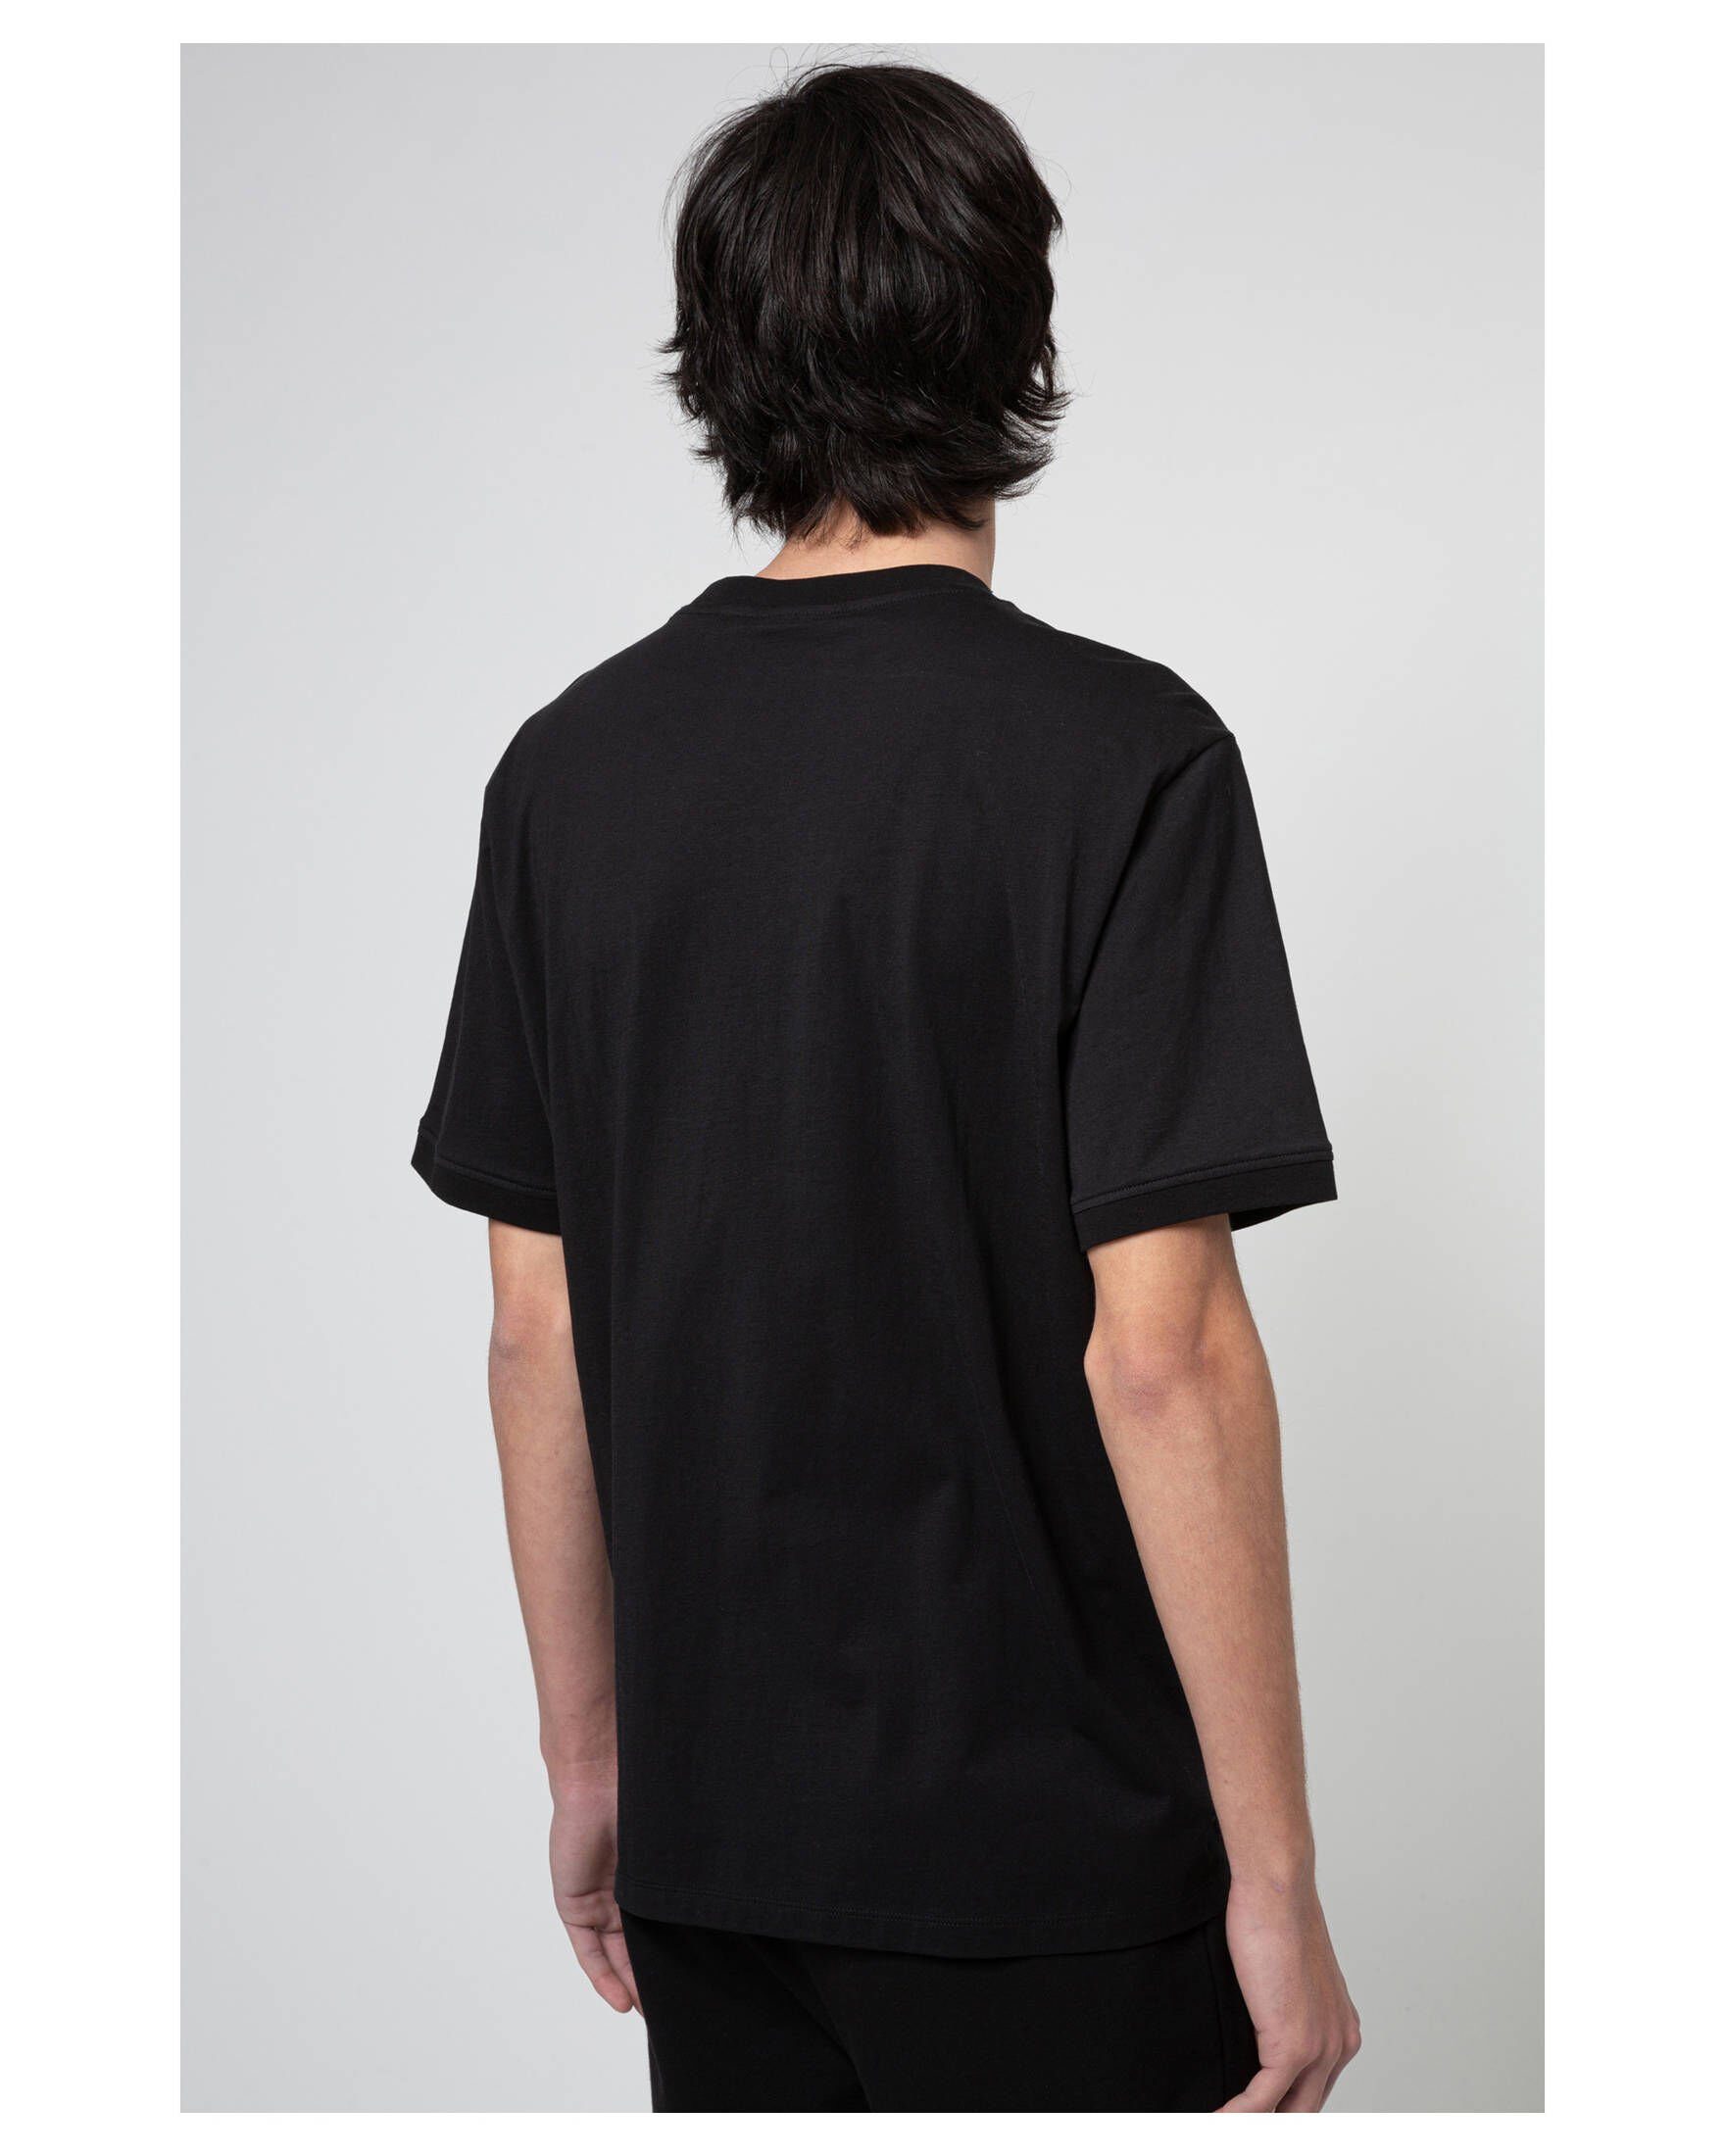 T-Shirt Herren (1-tlg) DIRAGOLINO212 schwarz (200) T-Shirt HUGO